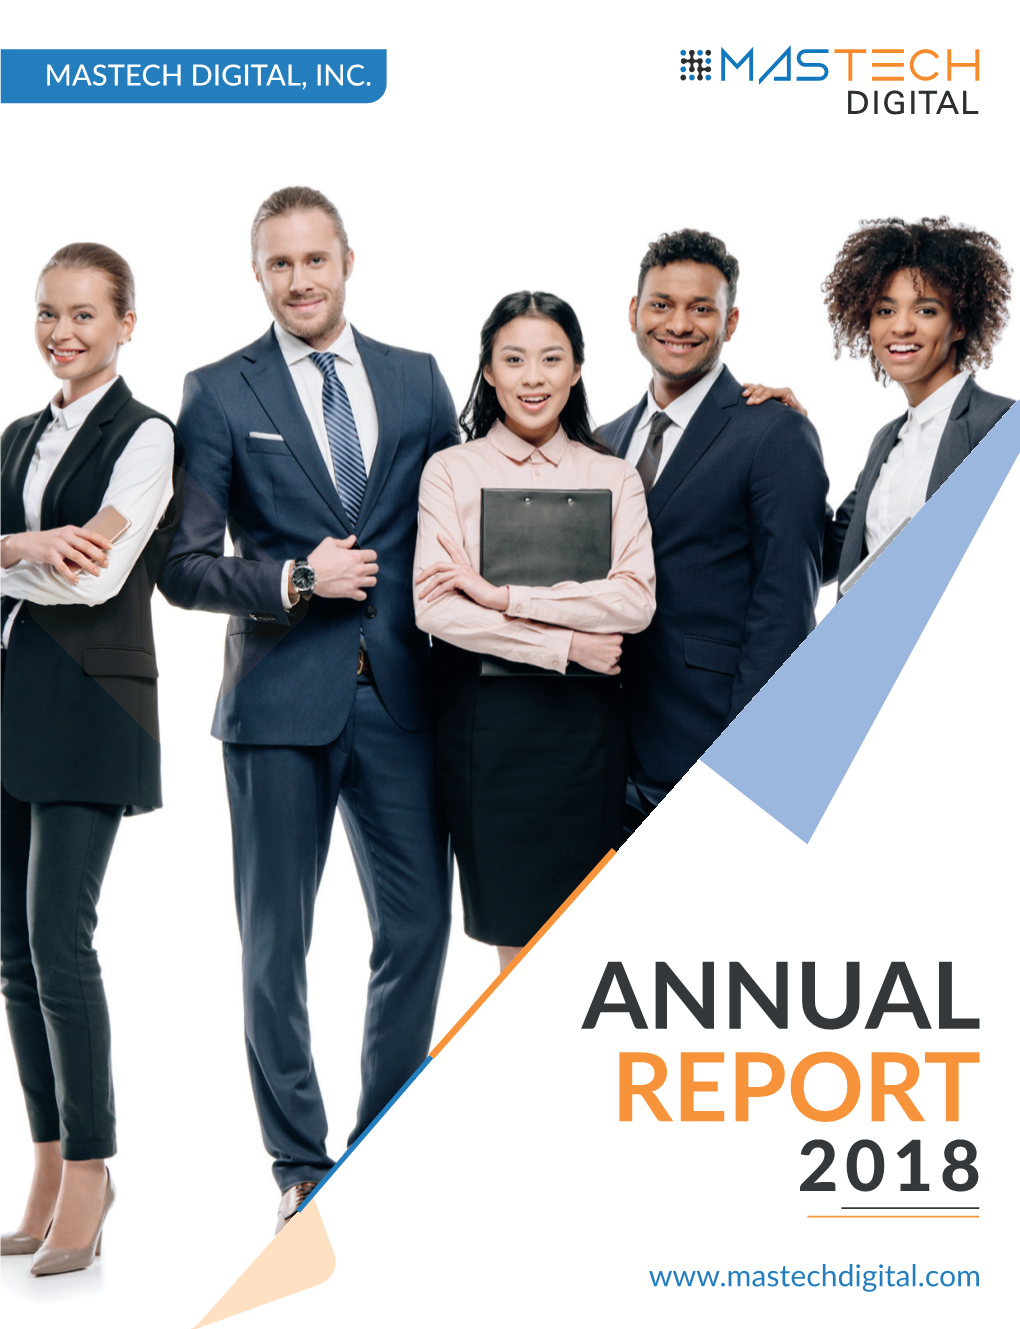 2018 Annual Report 2018 Annual MASTECH DIGITAL, INC